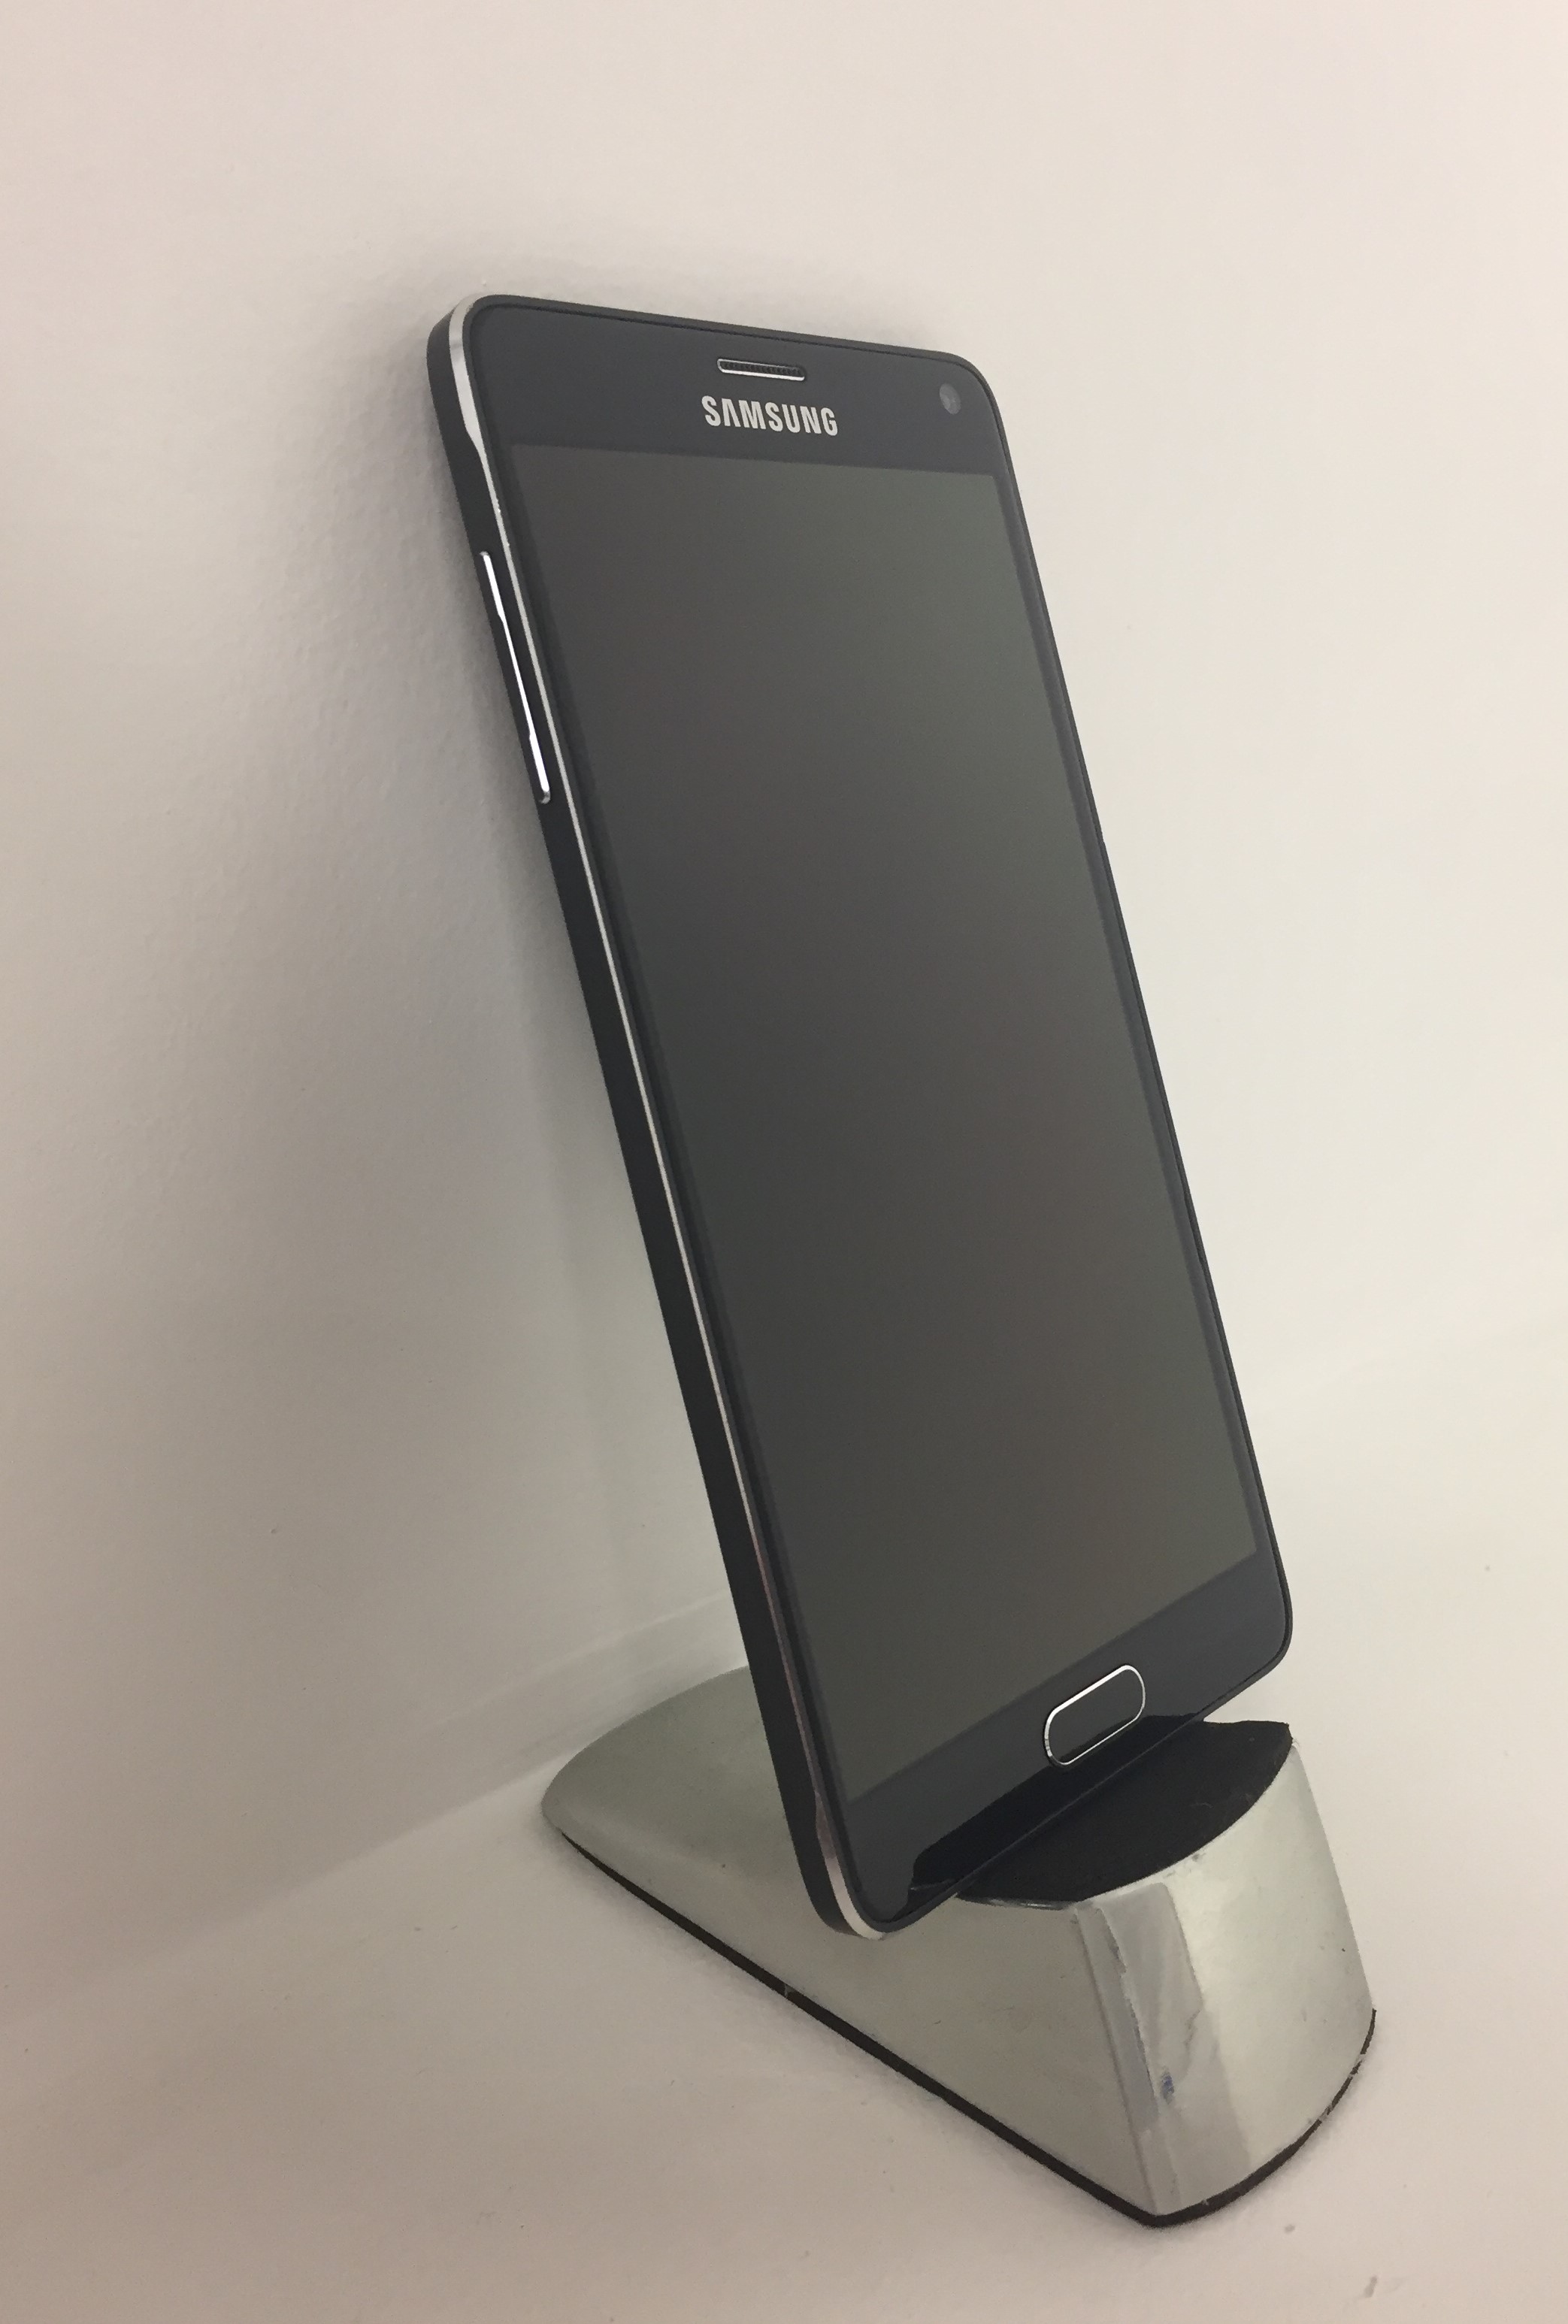 Refurbished Samsung Galaxy Note 4 Smart Phone